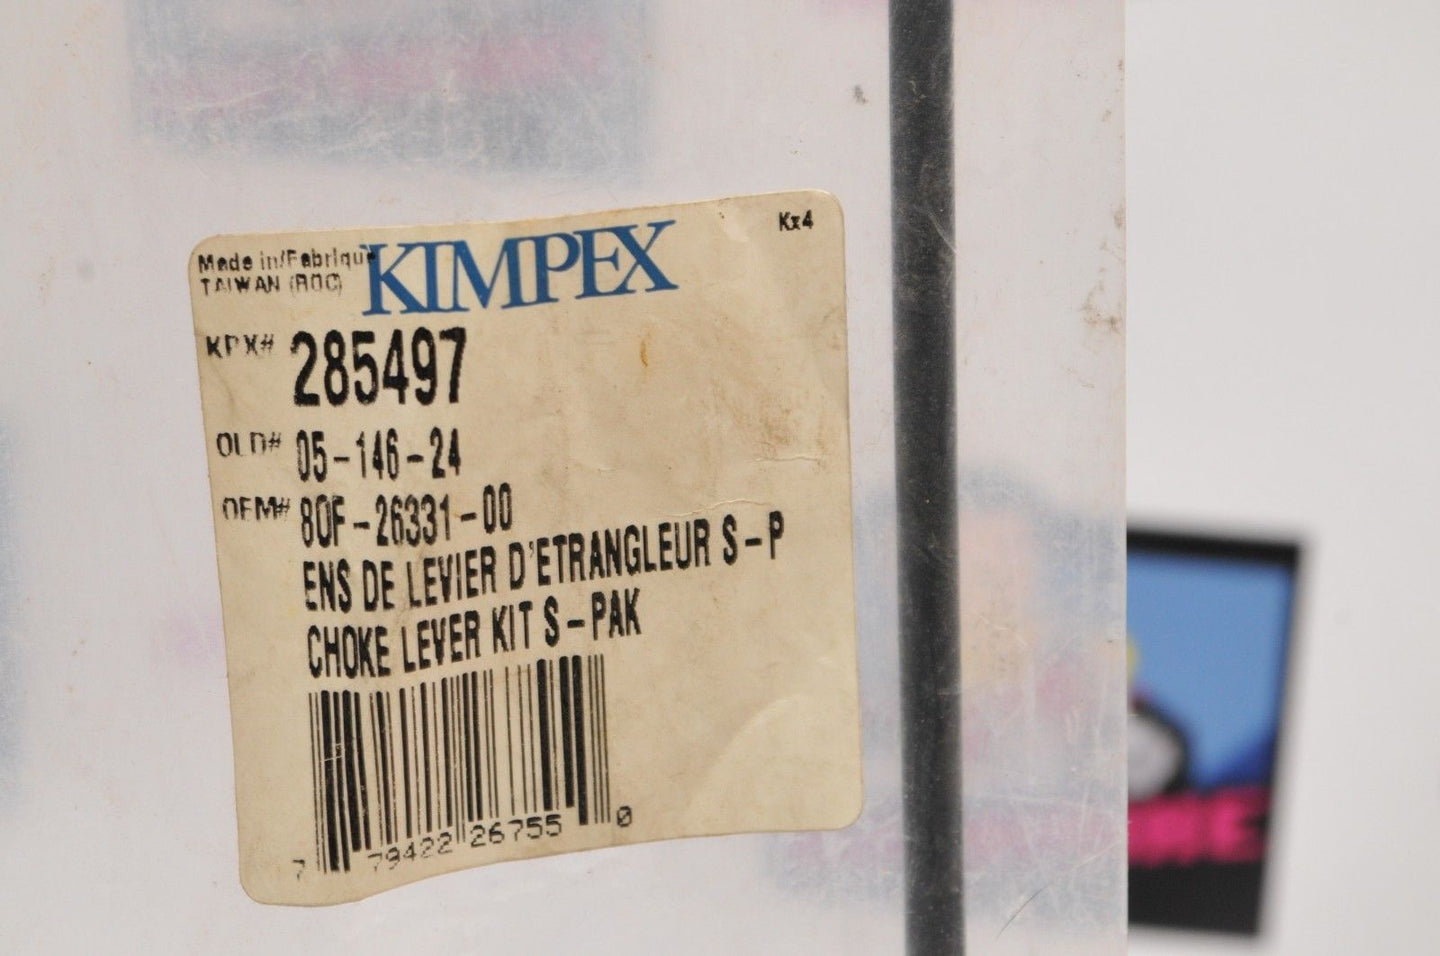 New KIMPEX NOS CABLE,CHOKE 05-146-24 YAMAHA (80F-26331-00) BRAVO 1984-2011